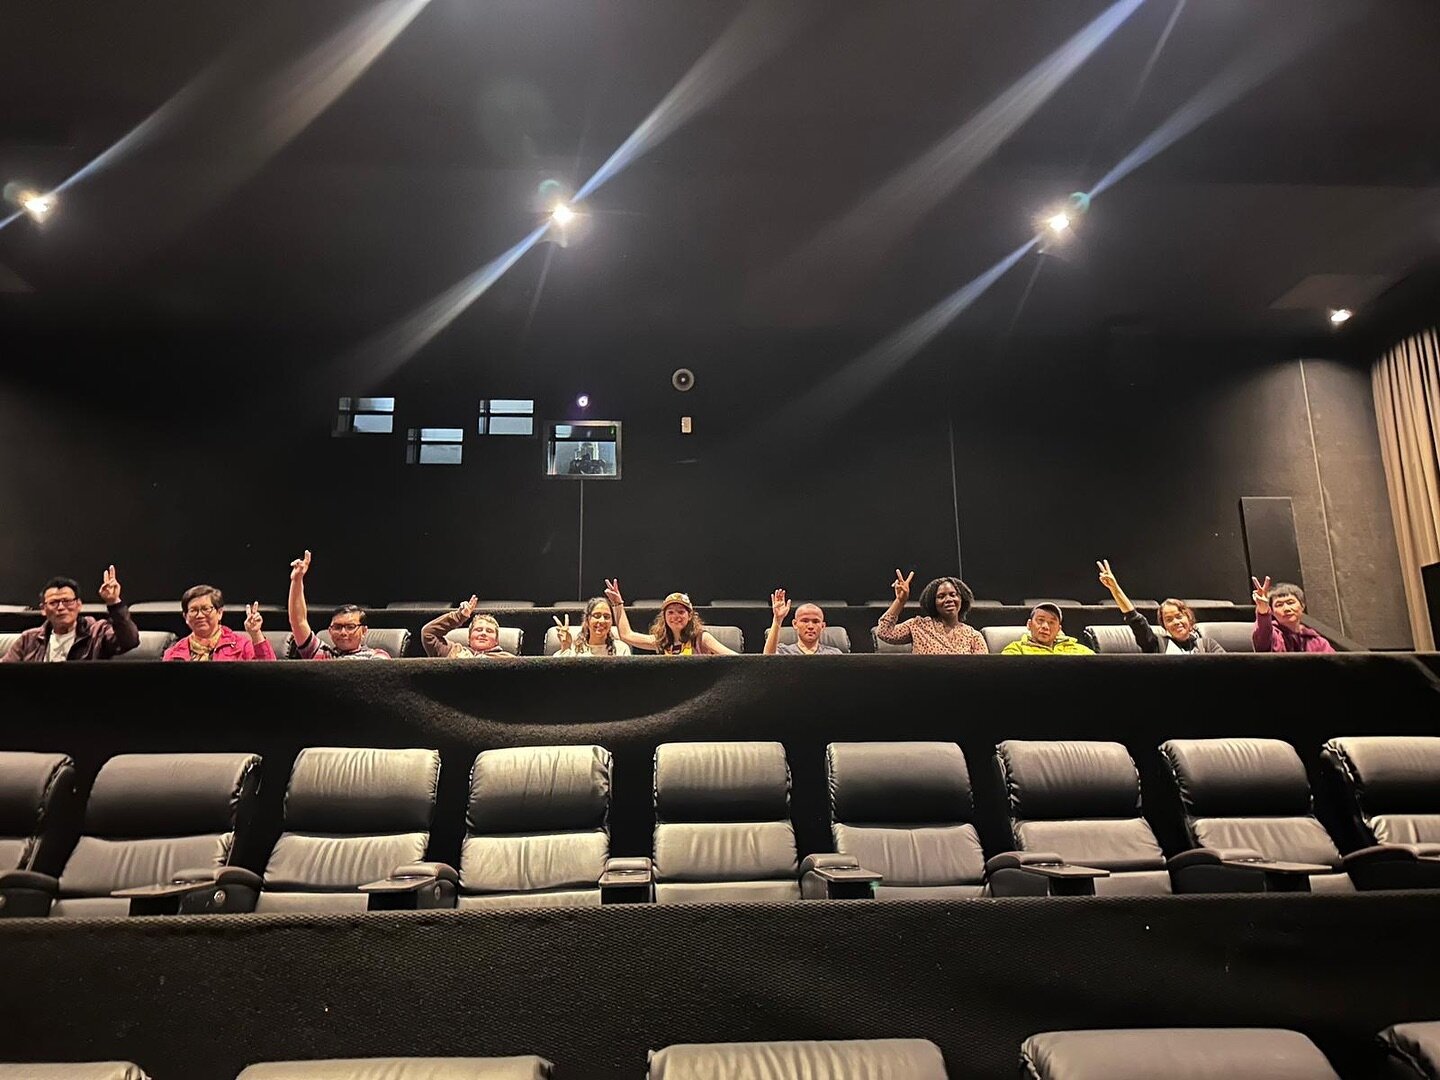 Back seat bandits at the movies 🎥 🍿 

🏷️ 
#smallbusinessmelbourne #smallbusinessvictoria #ndis #ndissupport #ndisaustralia #ndissupportcoordination #supportcoordination #disabilityawareness #disabilityinclusion #disabilitysupport #disabilityadvoca